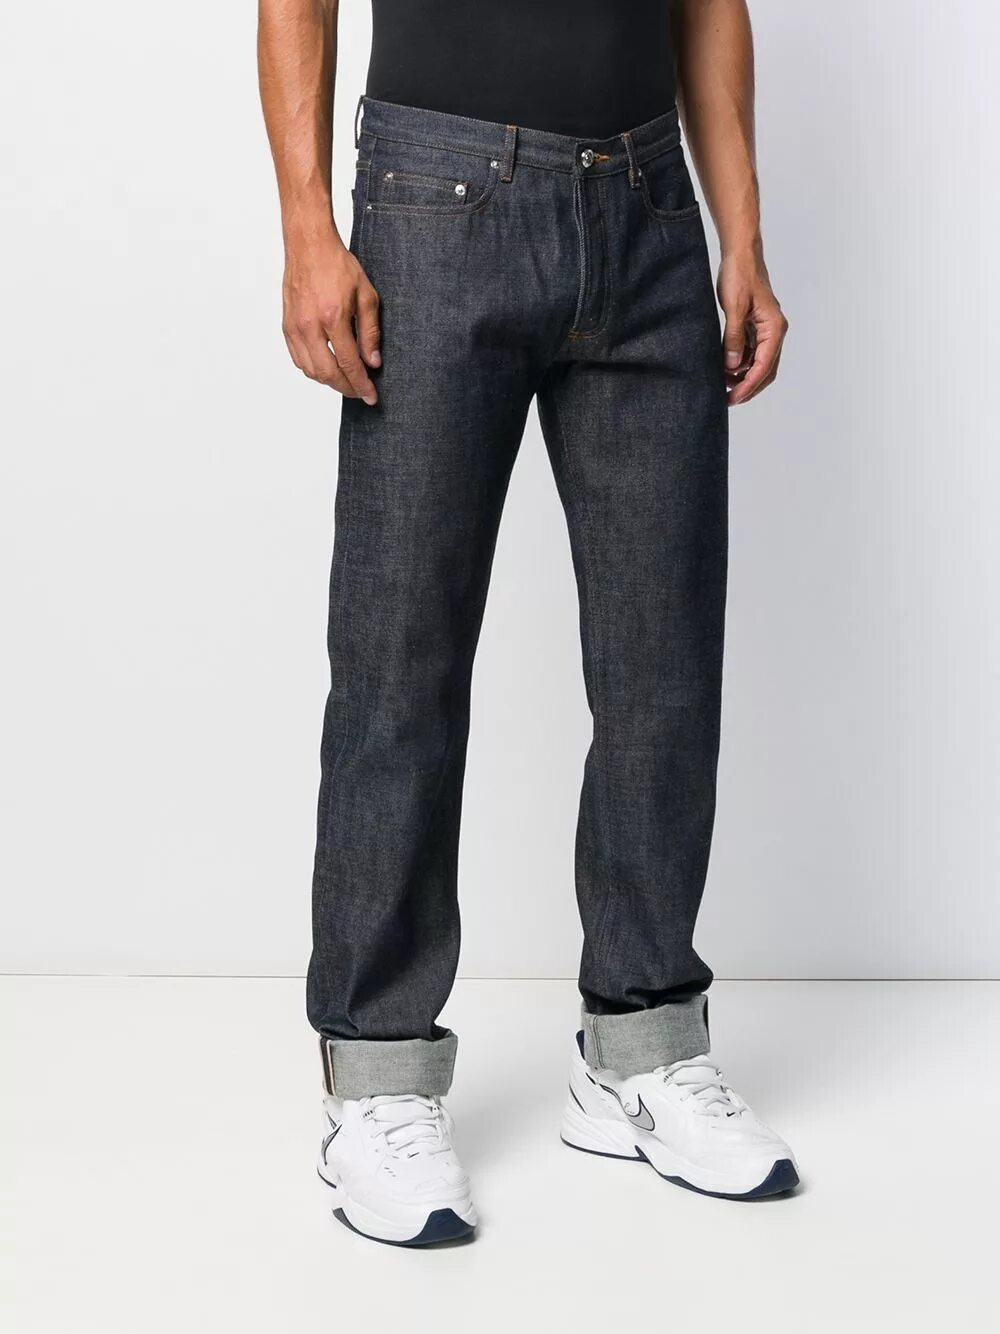 New jeans фото. Джинсы a p c New Standard. C A джинсы мужские. Нью джинс Нью джинс. Джинсы c23007.